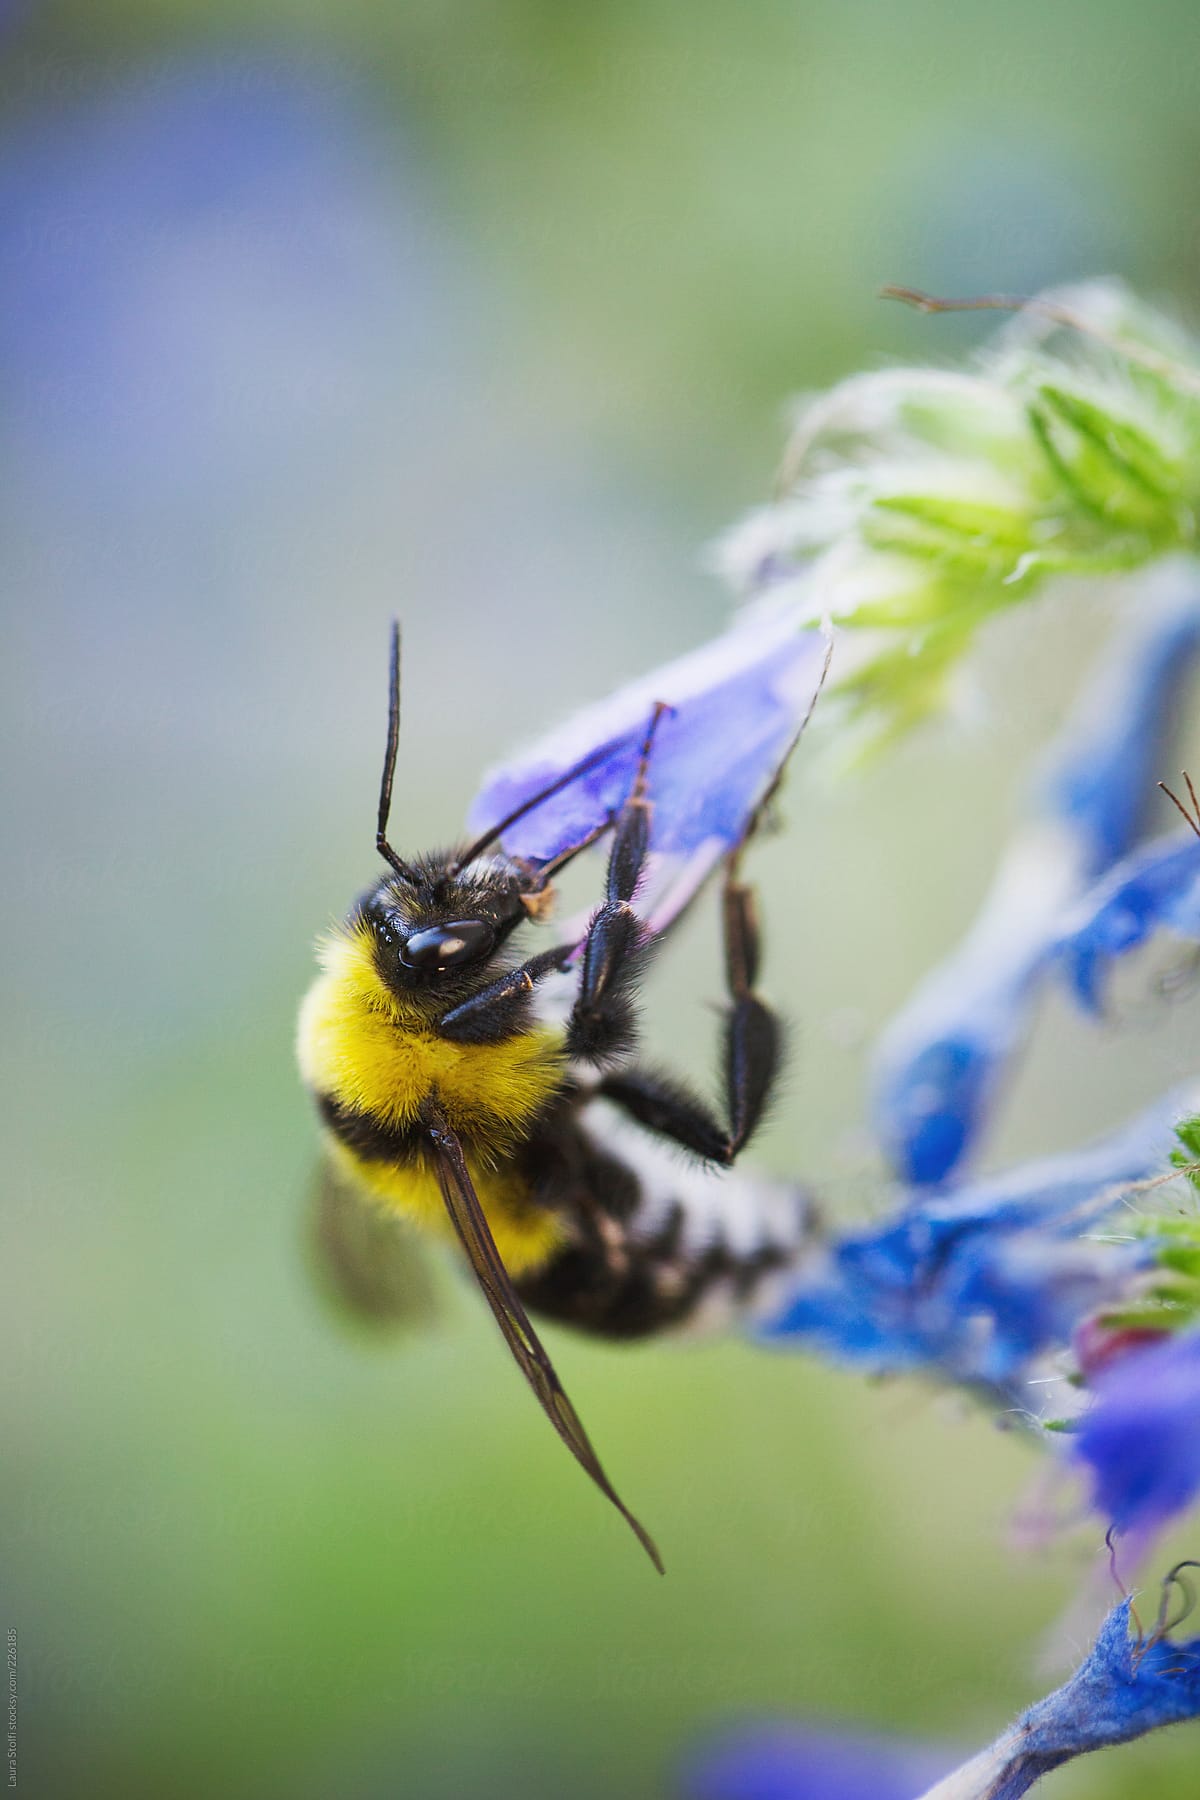 Macro catch of bumble bee with its proboscis inside an Echium flower